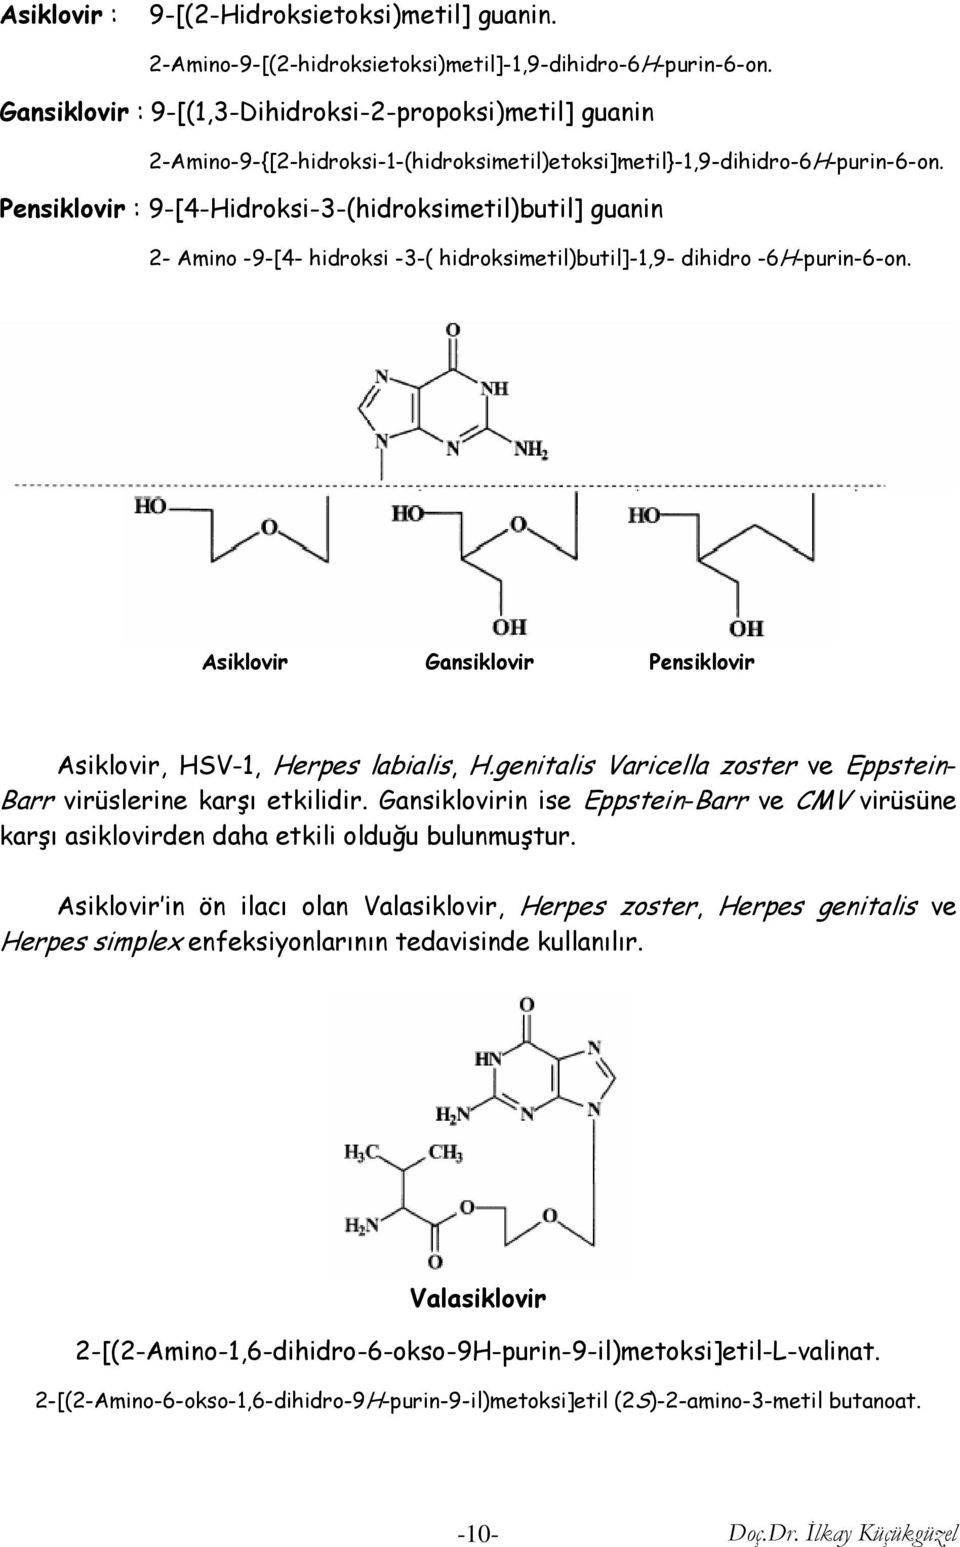 Pensiklovir : 9-[4-idroksi-3-(hidroksimetil)butil] guanin 2- Amino -9-[4- hidroksi -3-( hidroksimetil)butil]-1,9- dihidro -6-purin-6-on.